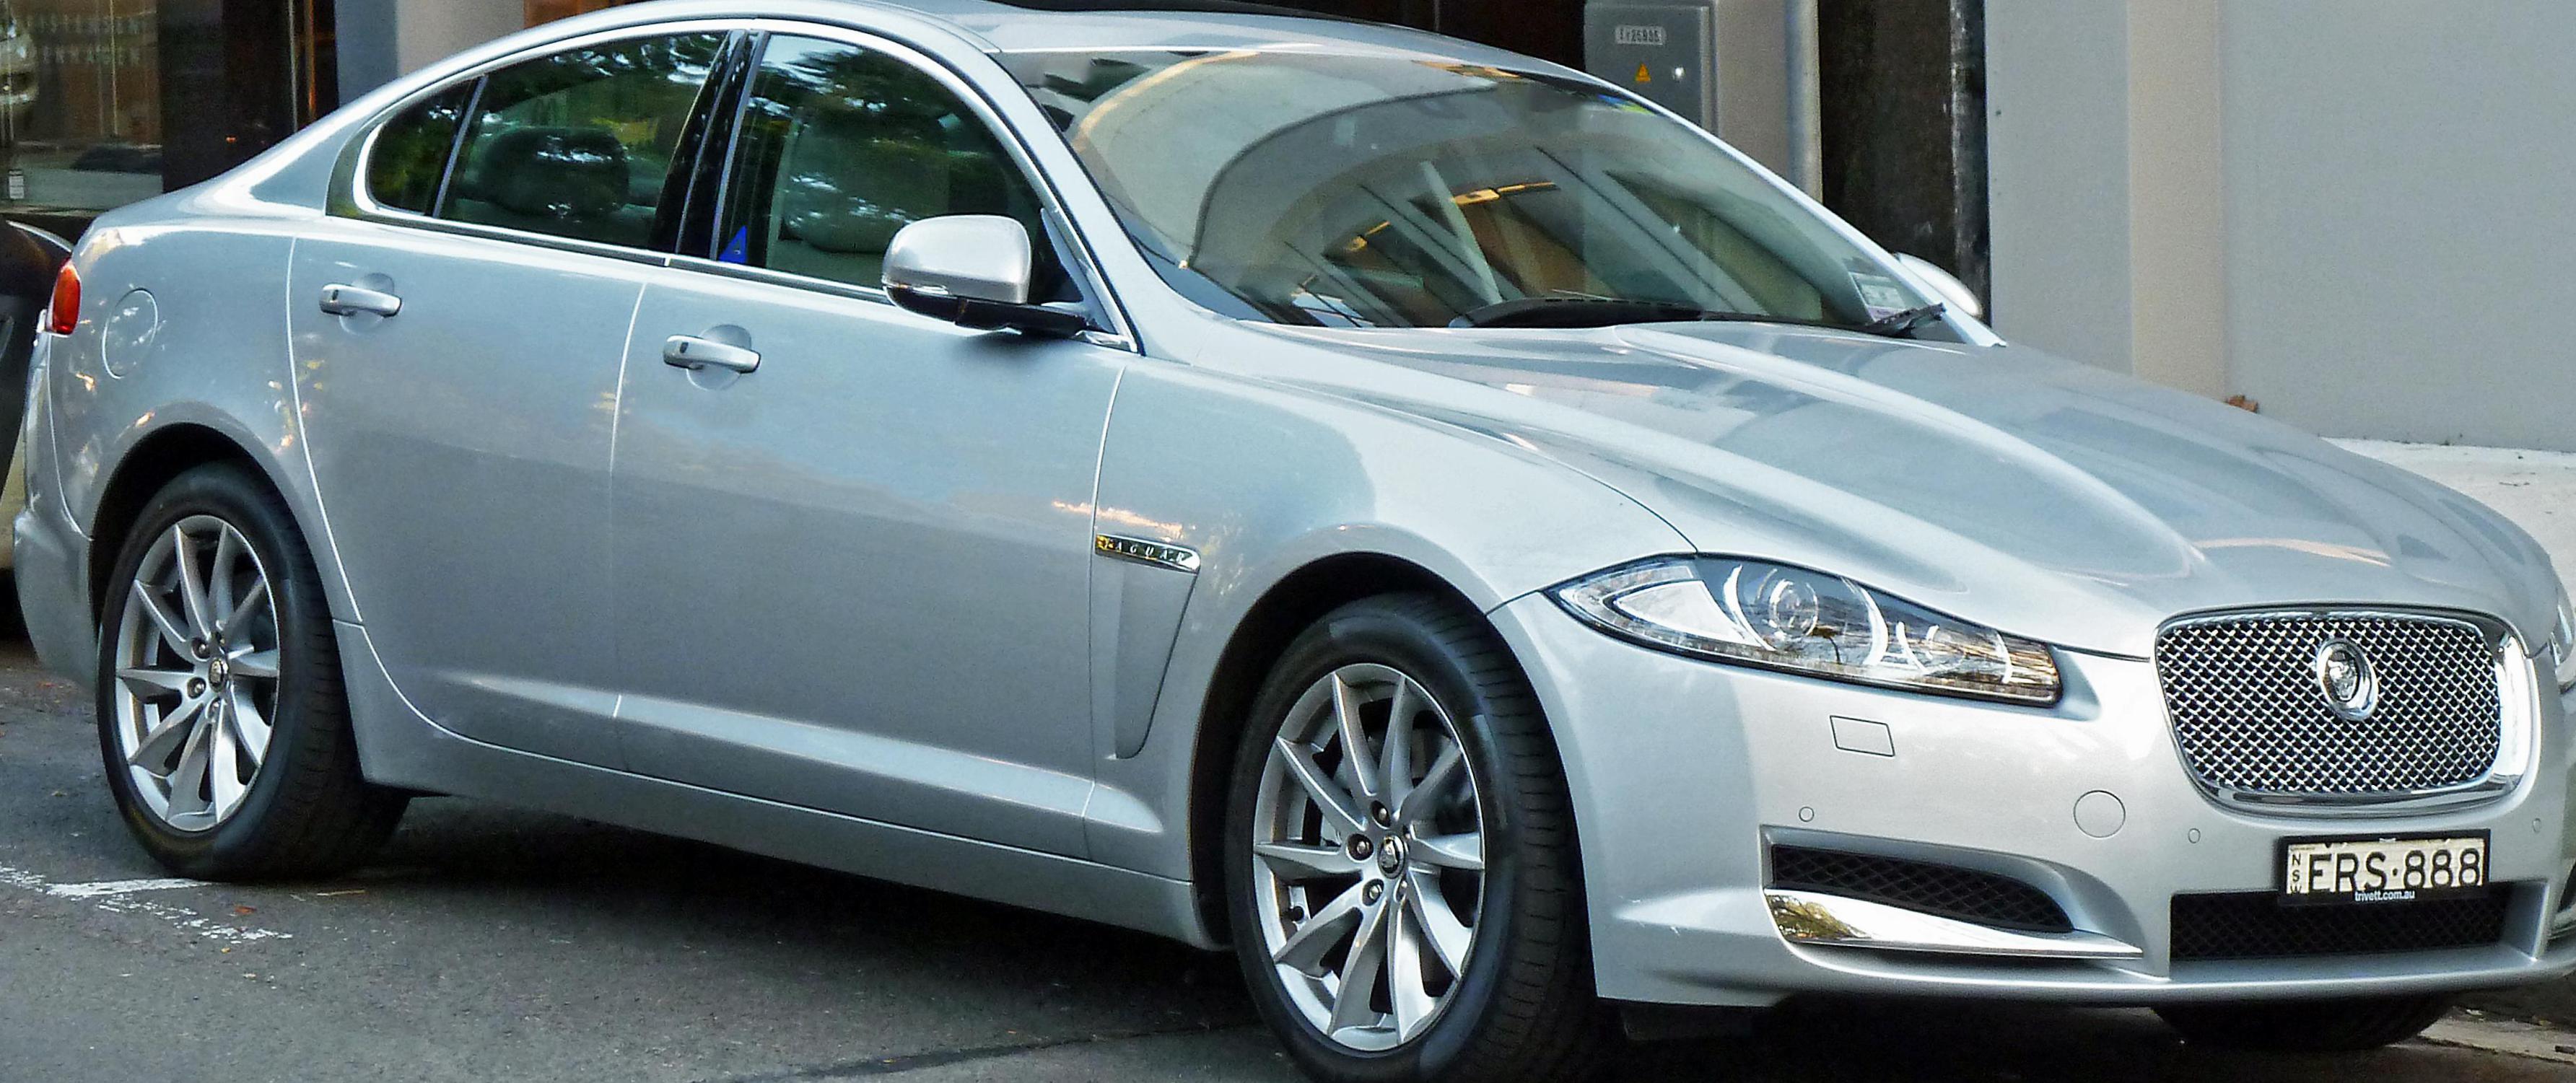 Jaguar XF model 2006